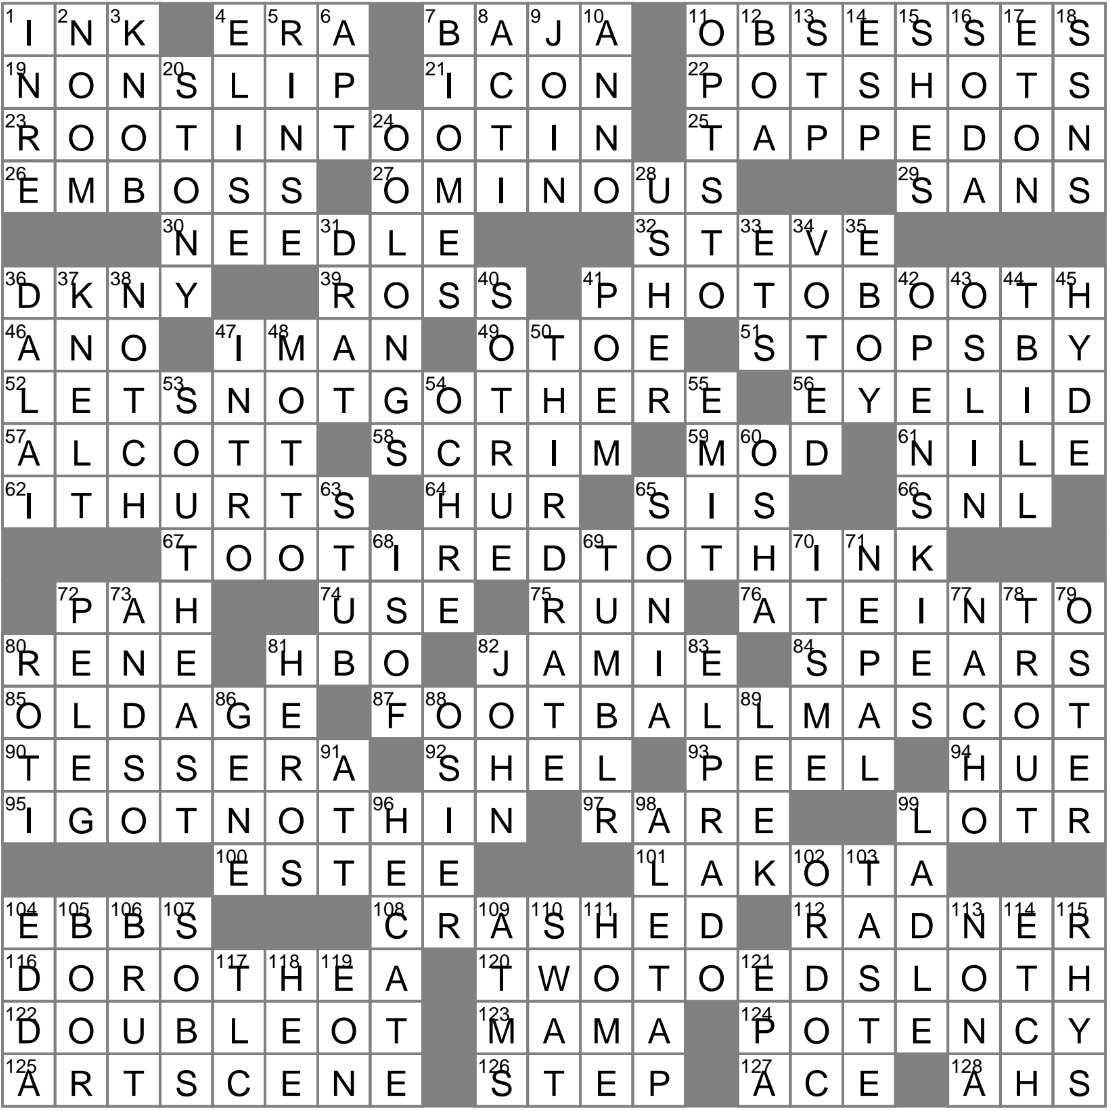 LA Times Crossword 12 Feb 23 Sunday LAXCrossword com